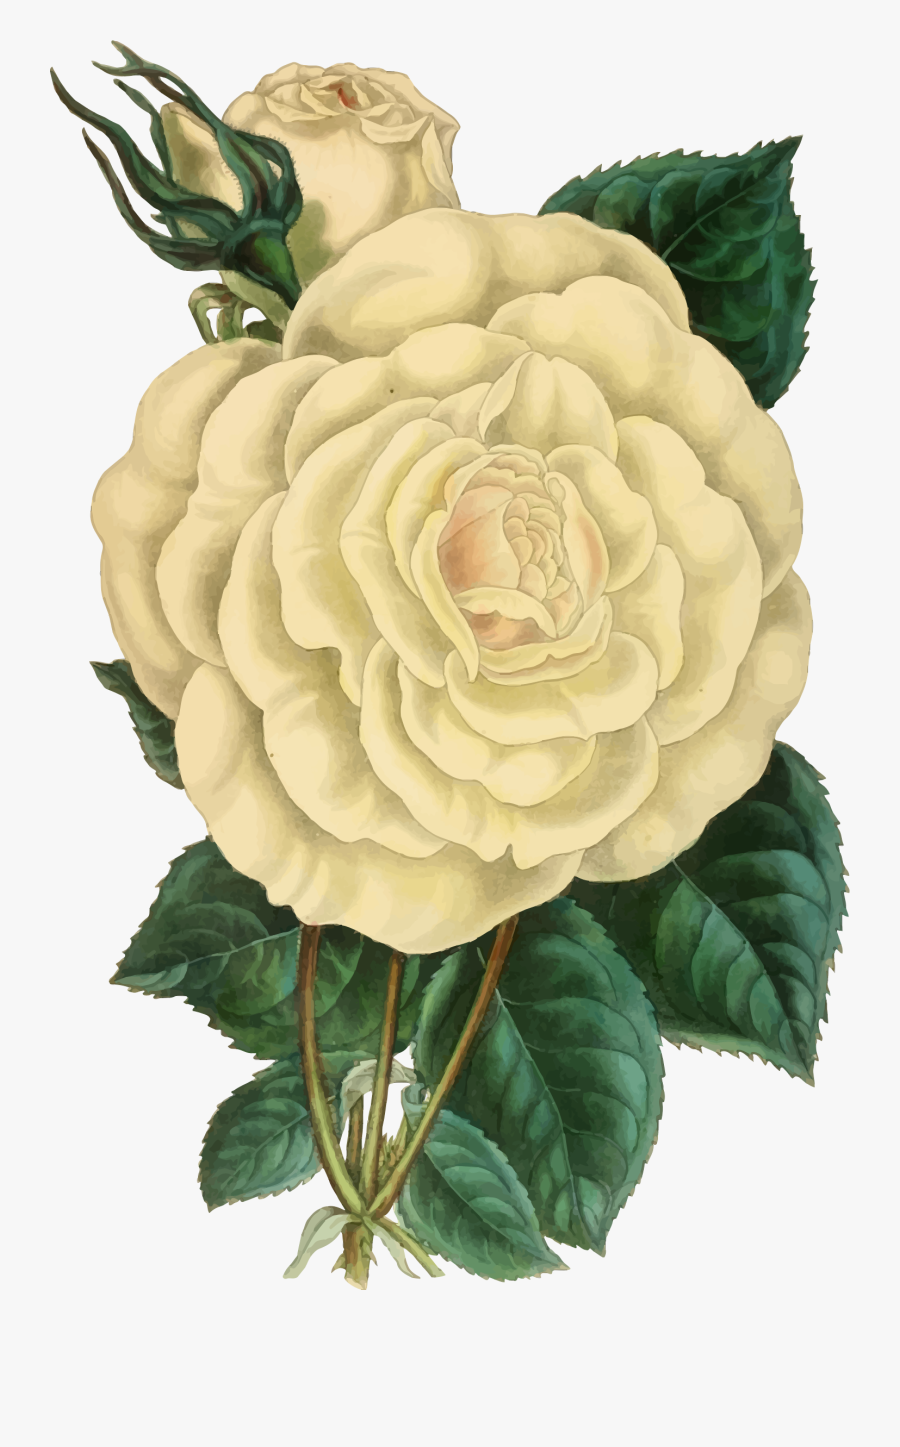 Clipart - Vintage Rose Illustration Png, Transparent Clipart